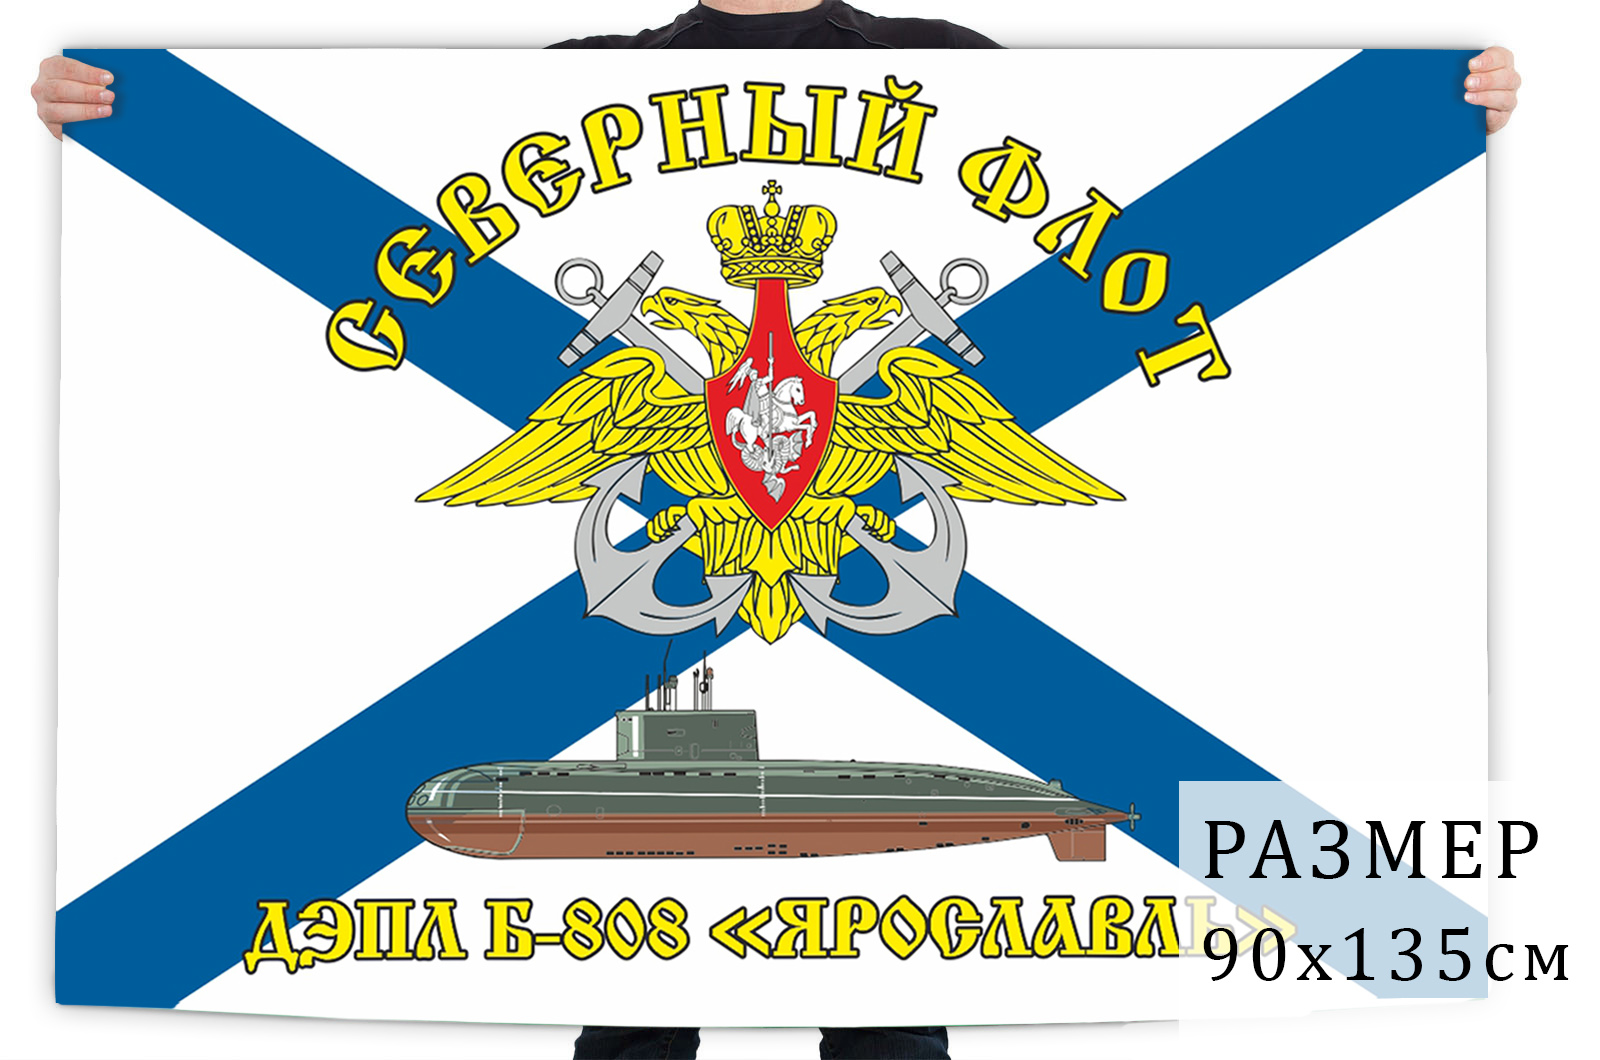 Заказать флаг ВМФ Б-808 Ярославль